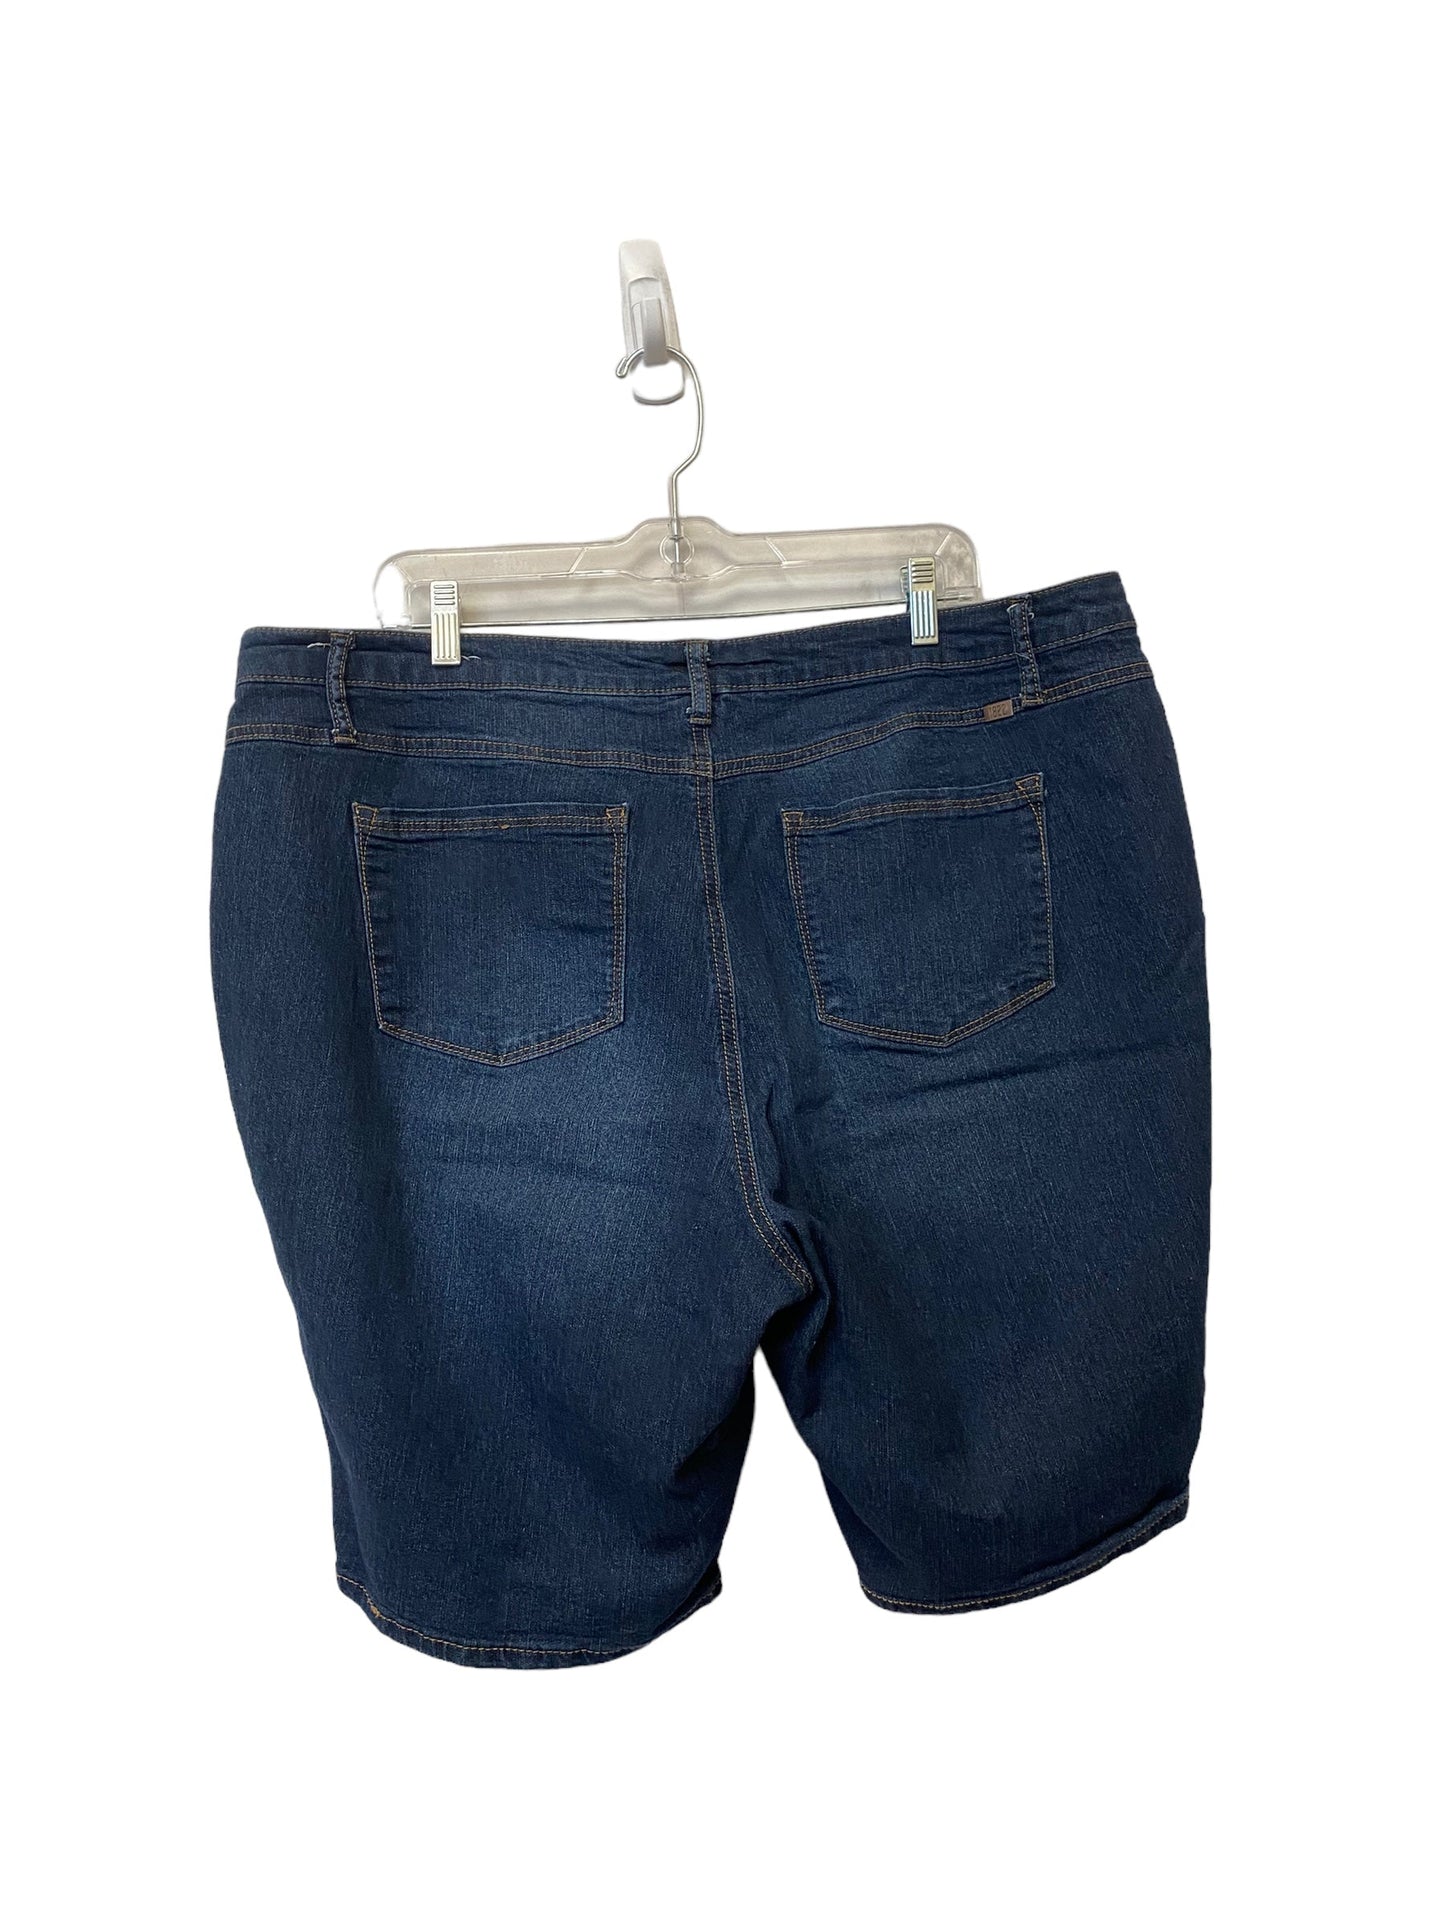 Shorts By 1822 Denim  Size: 20